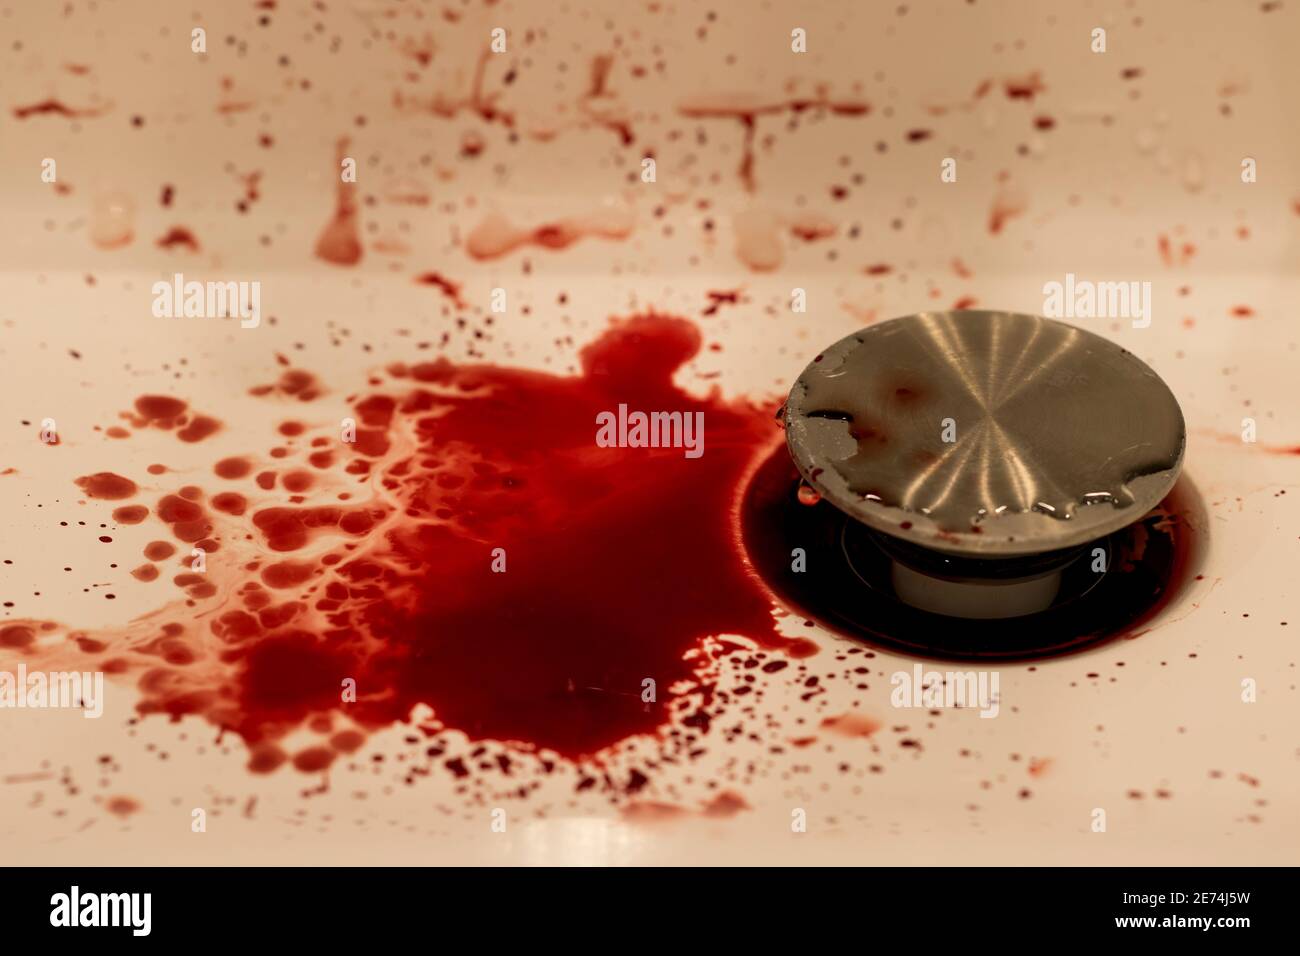 Taches de sang scène de crime de sang humain ADN de sang gros plan. Scène de crime près de la piscine de sang humain. Banque D'Images